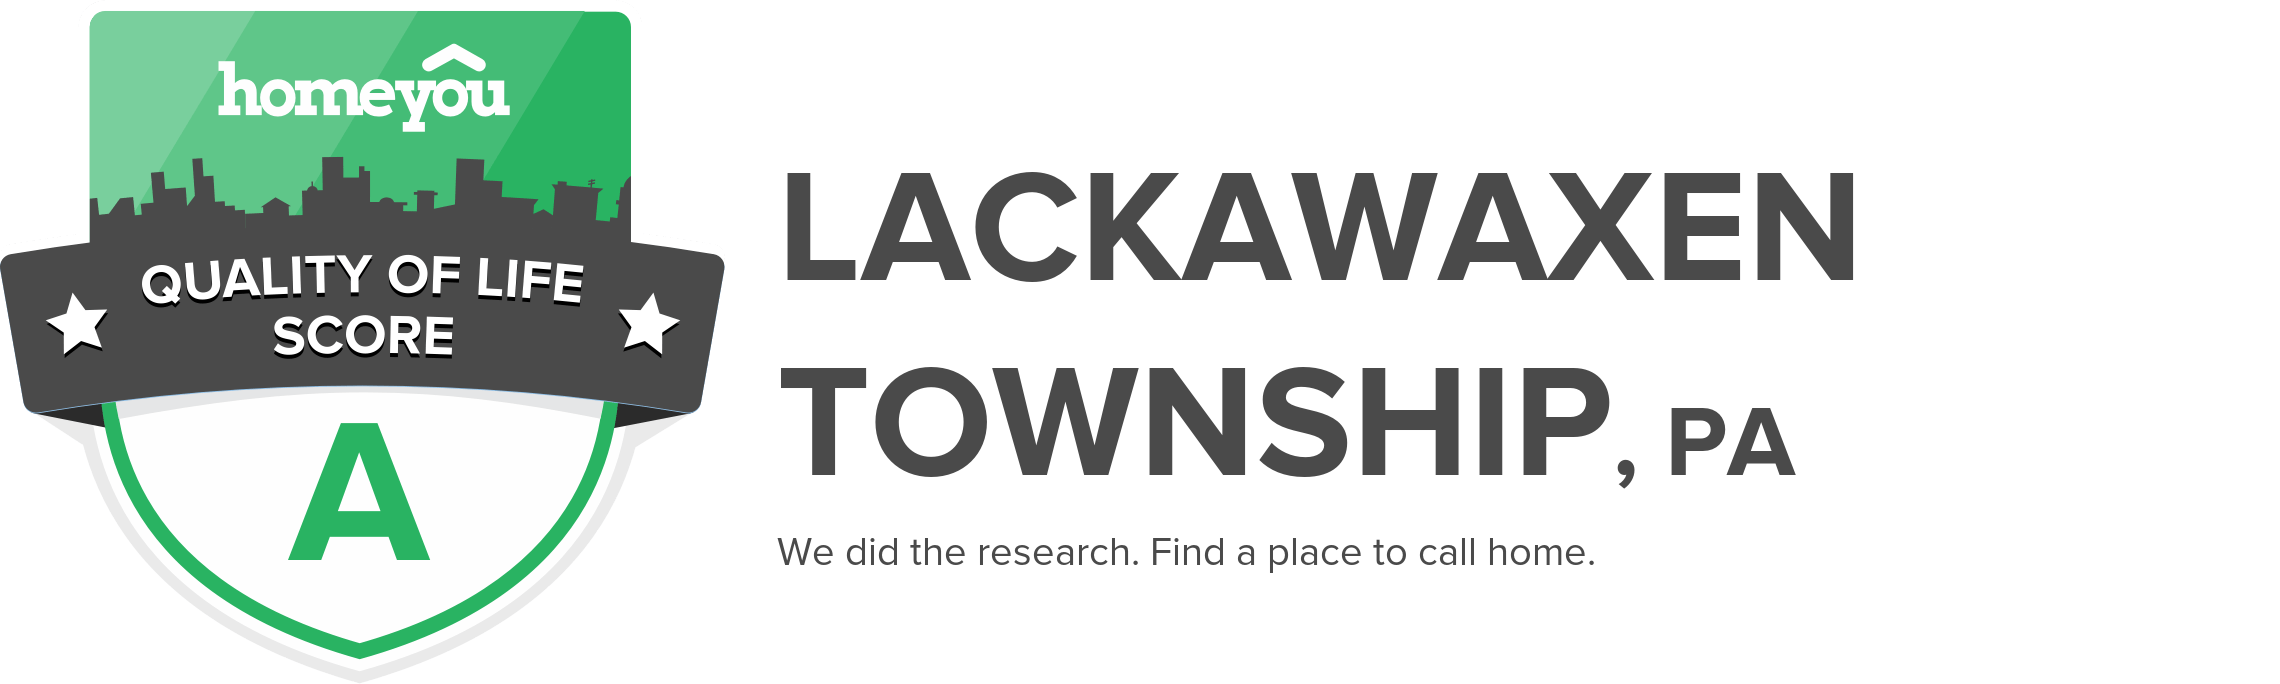 Lackawaxen township, PA